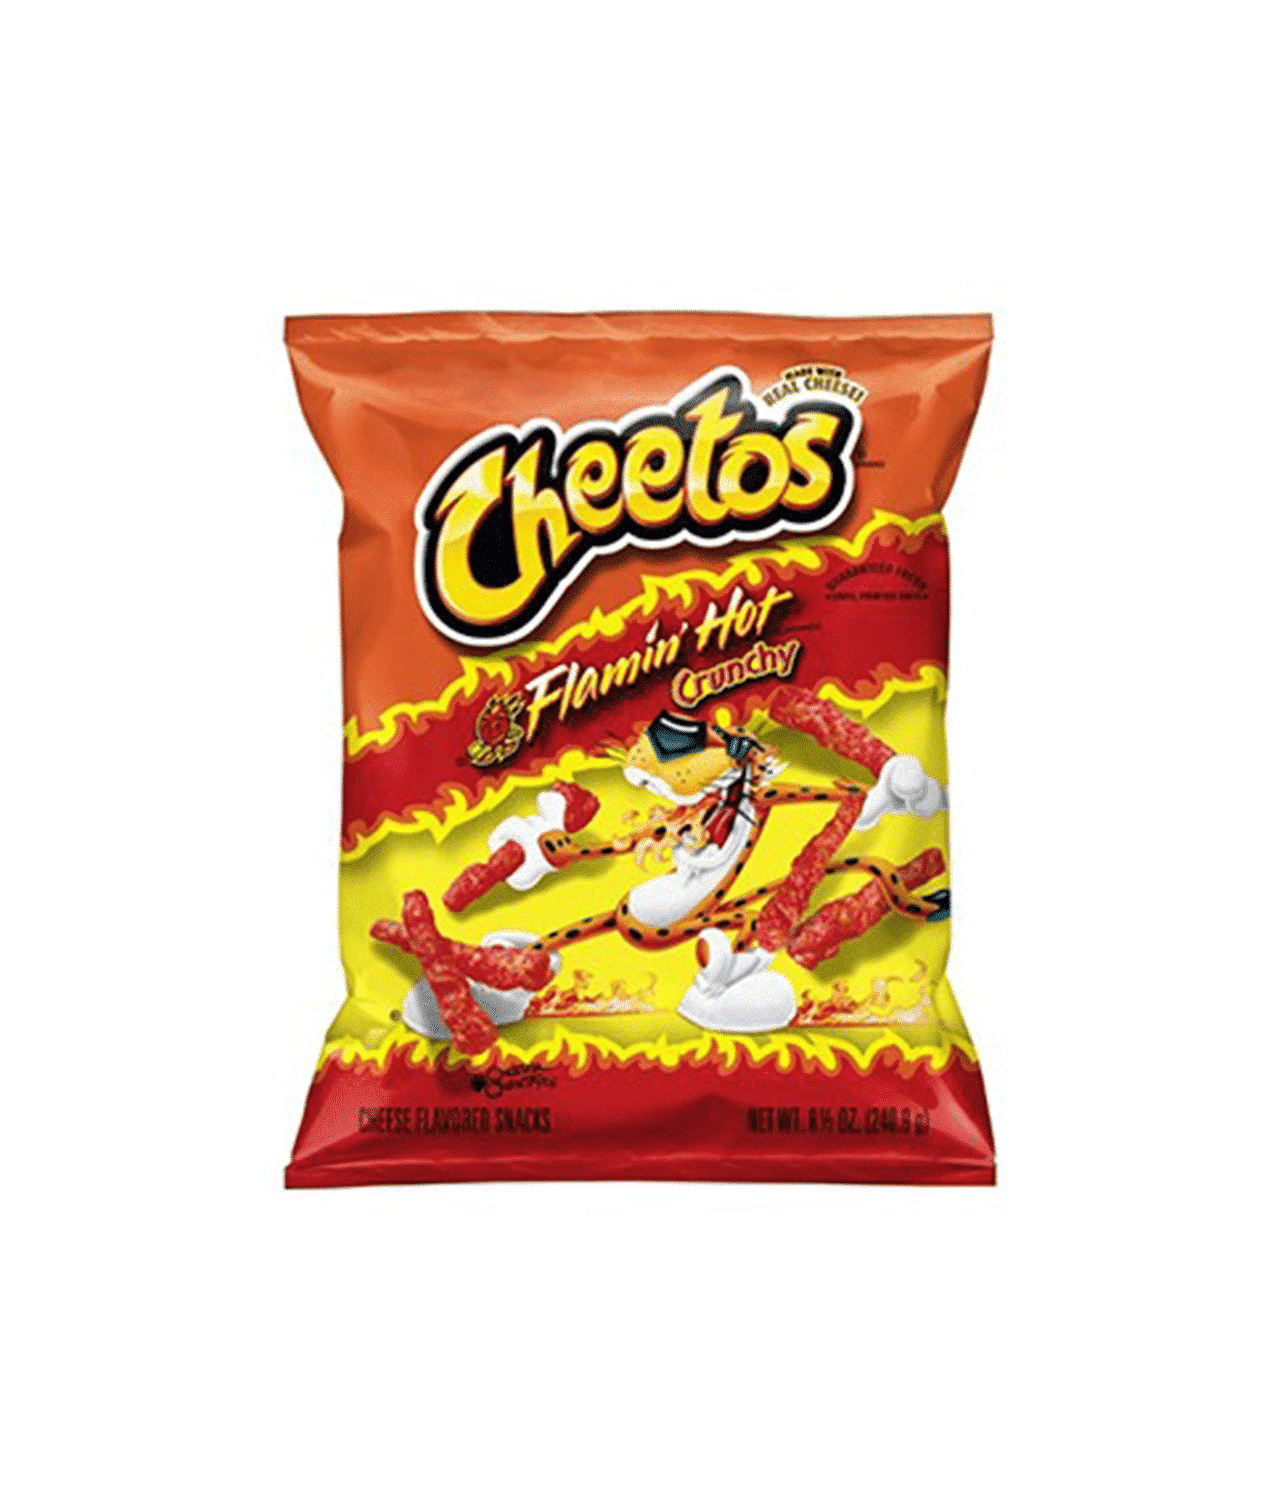 Cheetos Flamin' Hot Crunchy 35g American Snacks american.